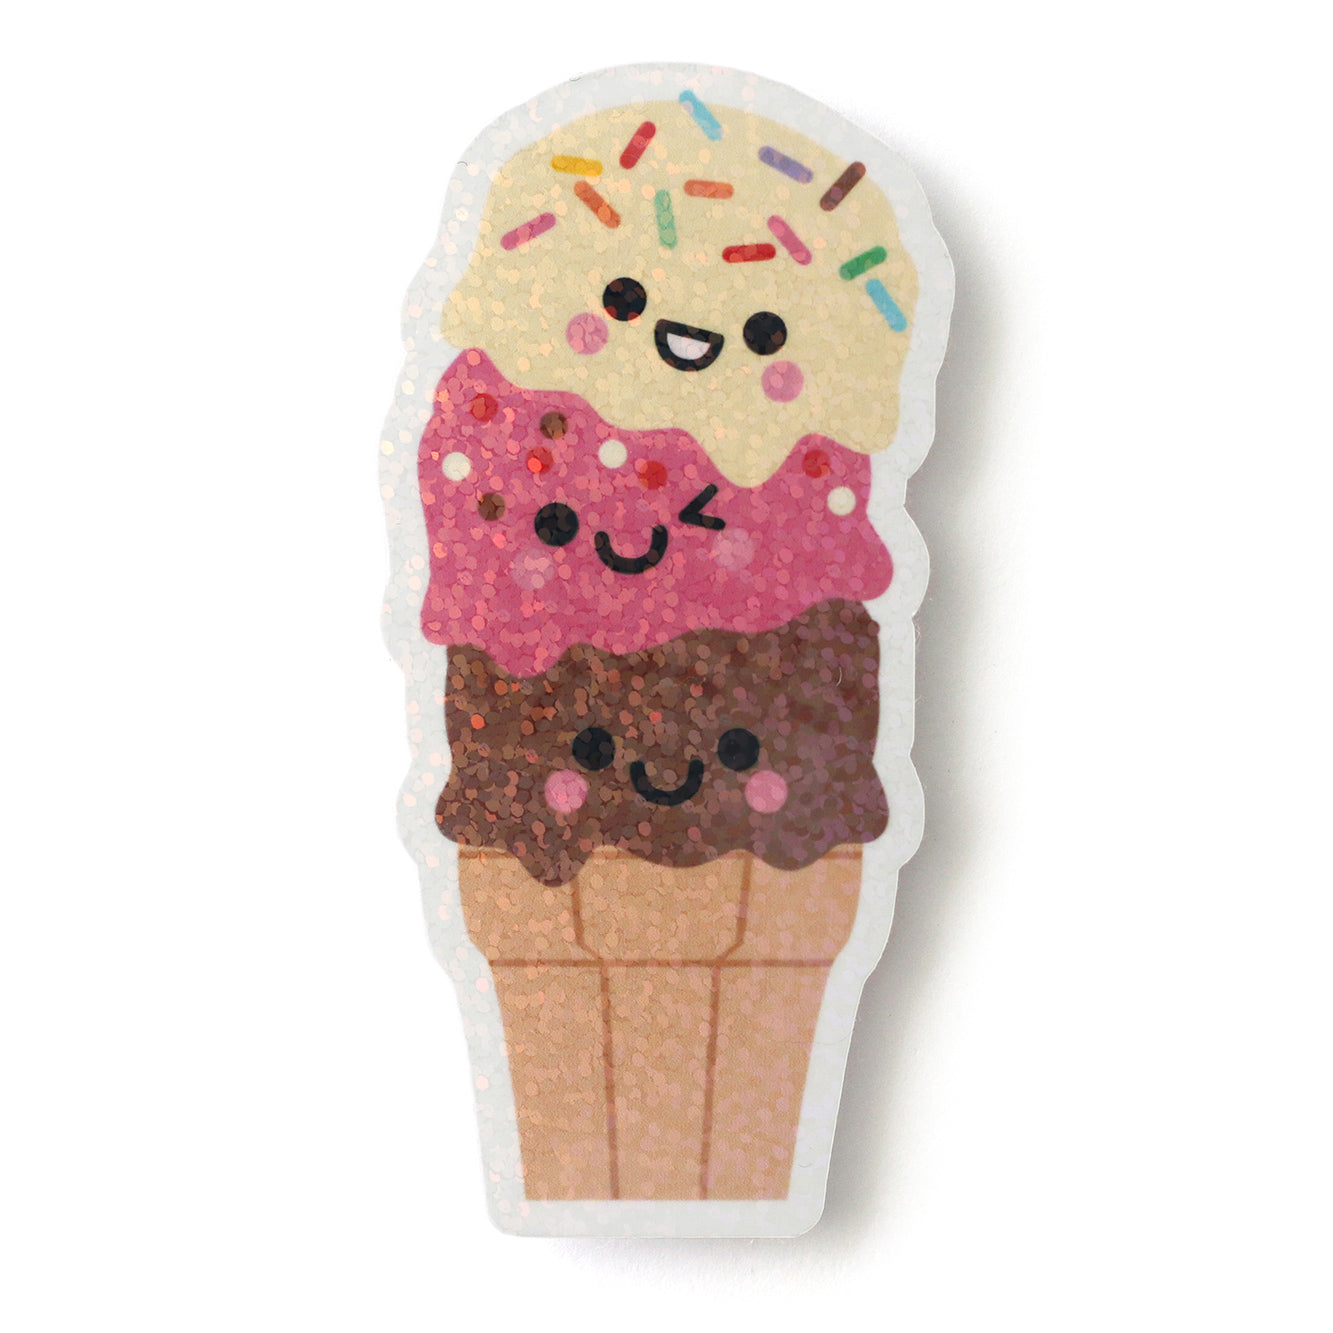 Cute Neapolitan ice cream sticker with 3 ice cream scoops sat on top of an ice cream cone